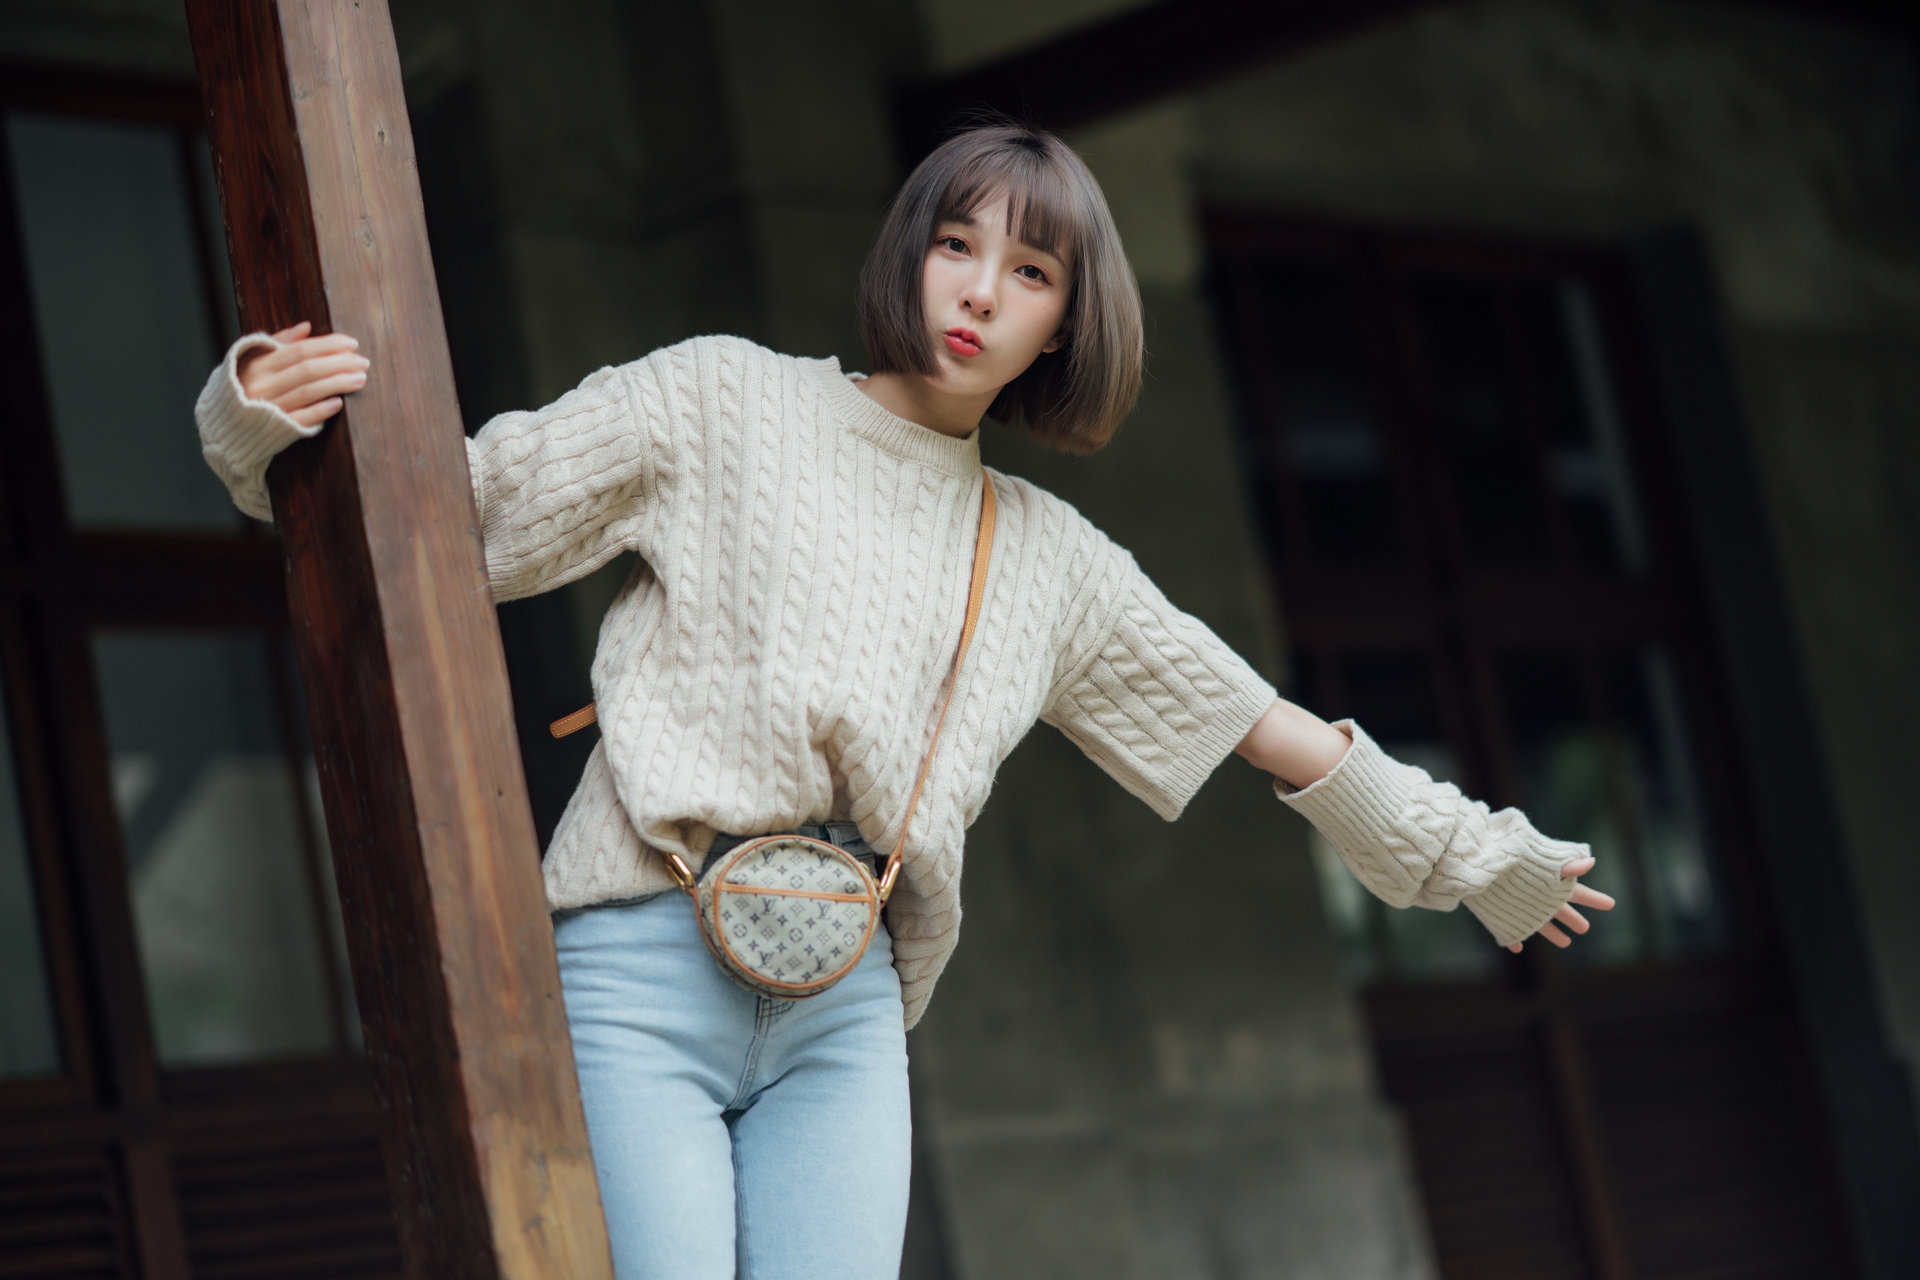 People 1920x1280 Asian model women short hair dark hair jeans pullover bag arm warmers depth of field